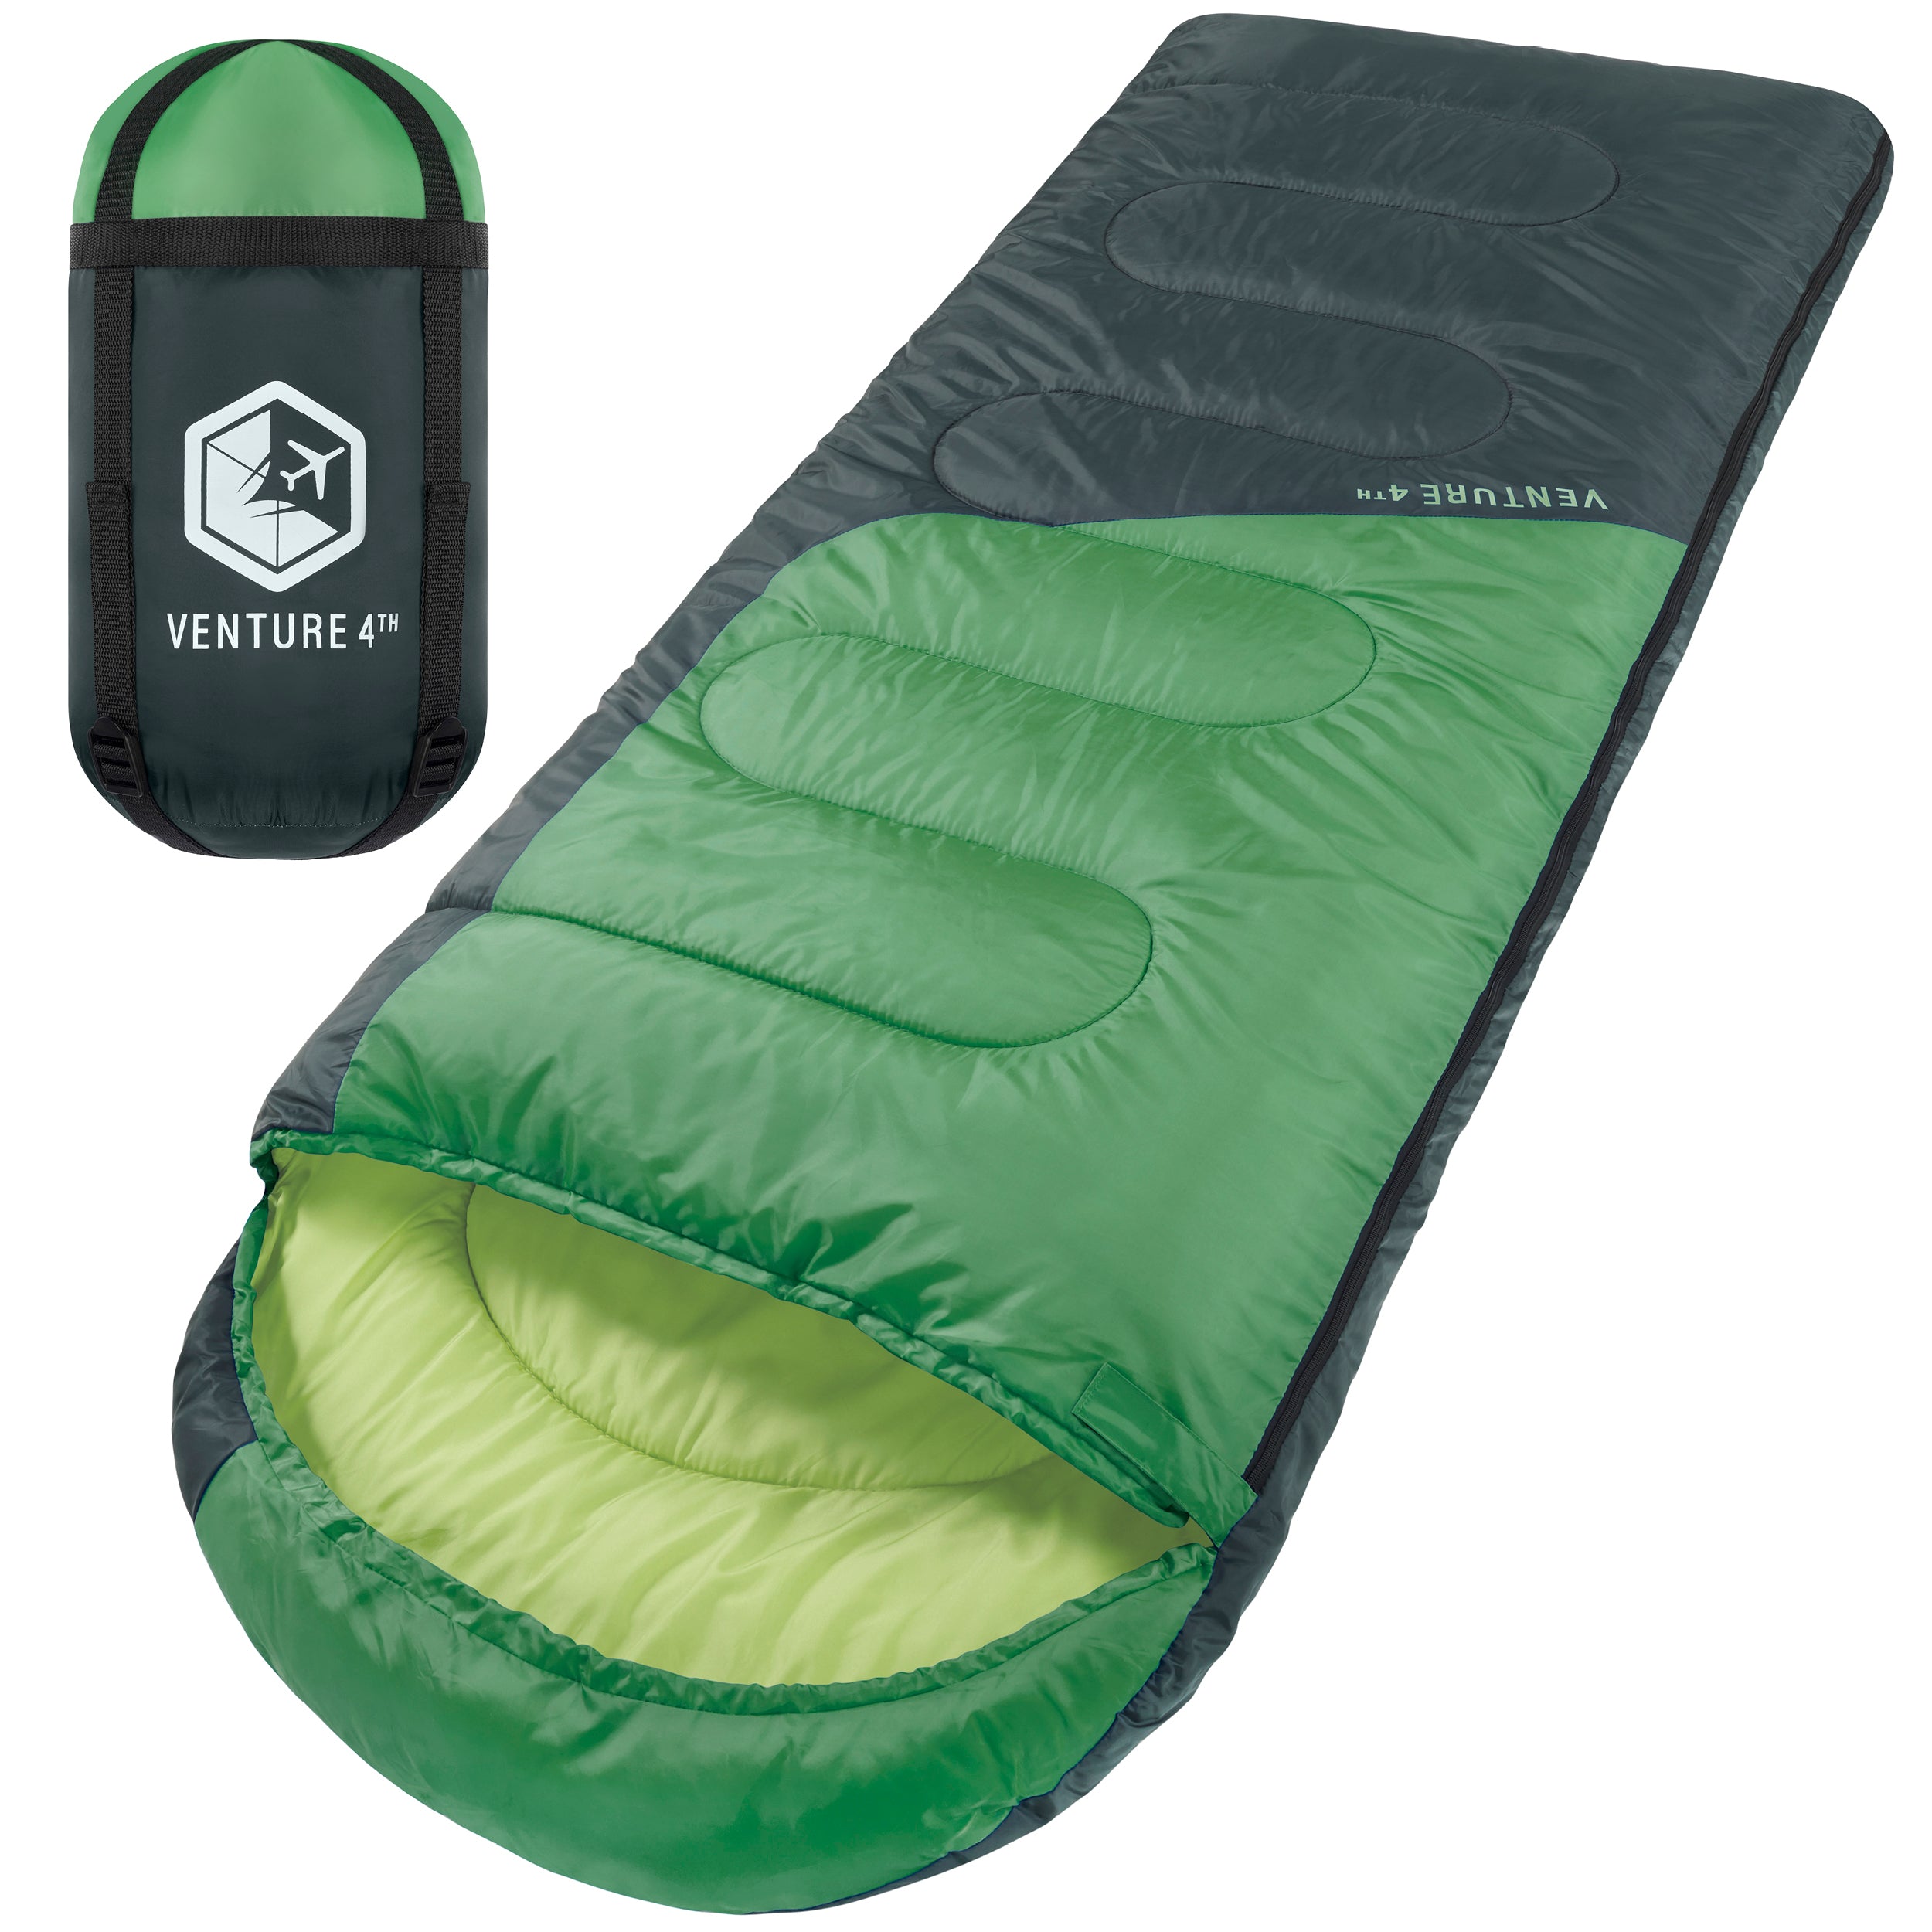 SHANNA Camping Sleeping Bag 3 Seasons Lightweight & Waterproof